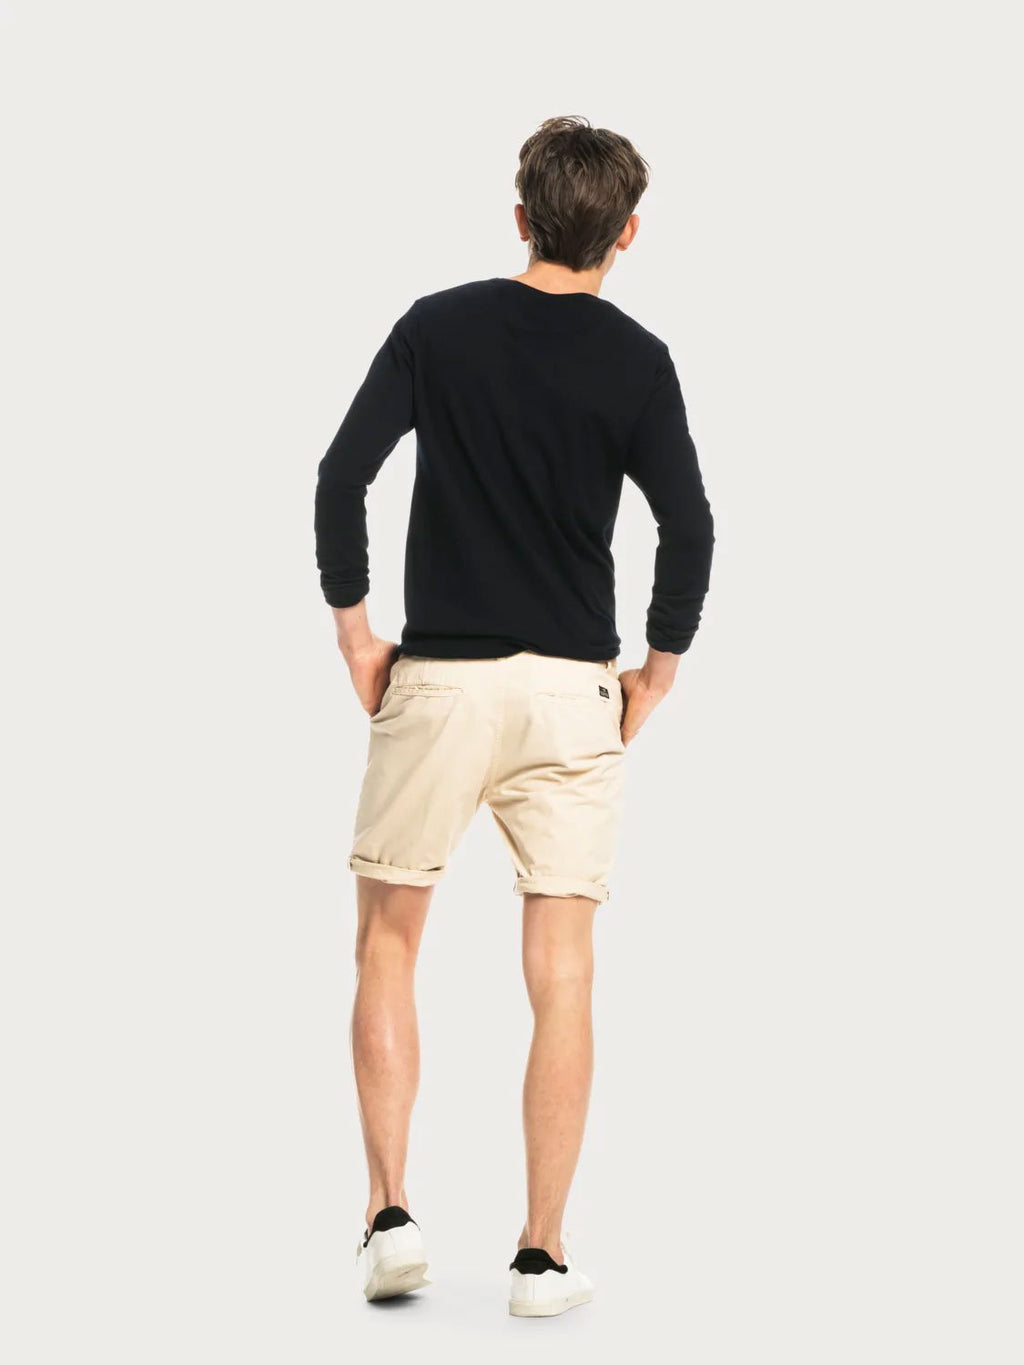 Basic Shorts